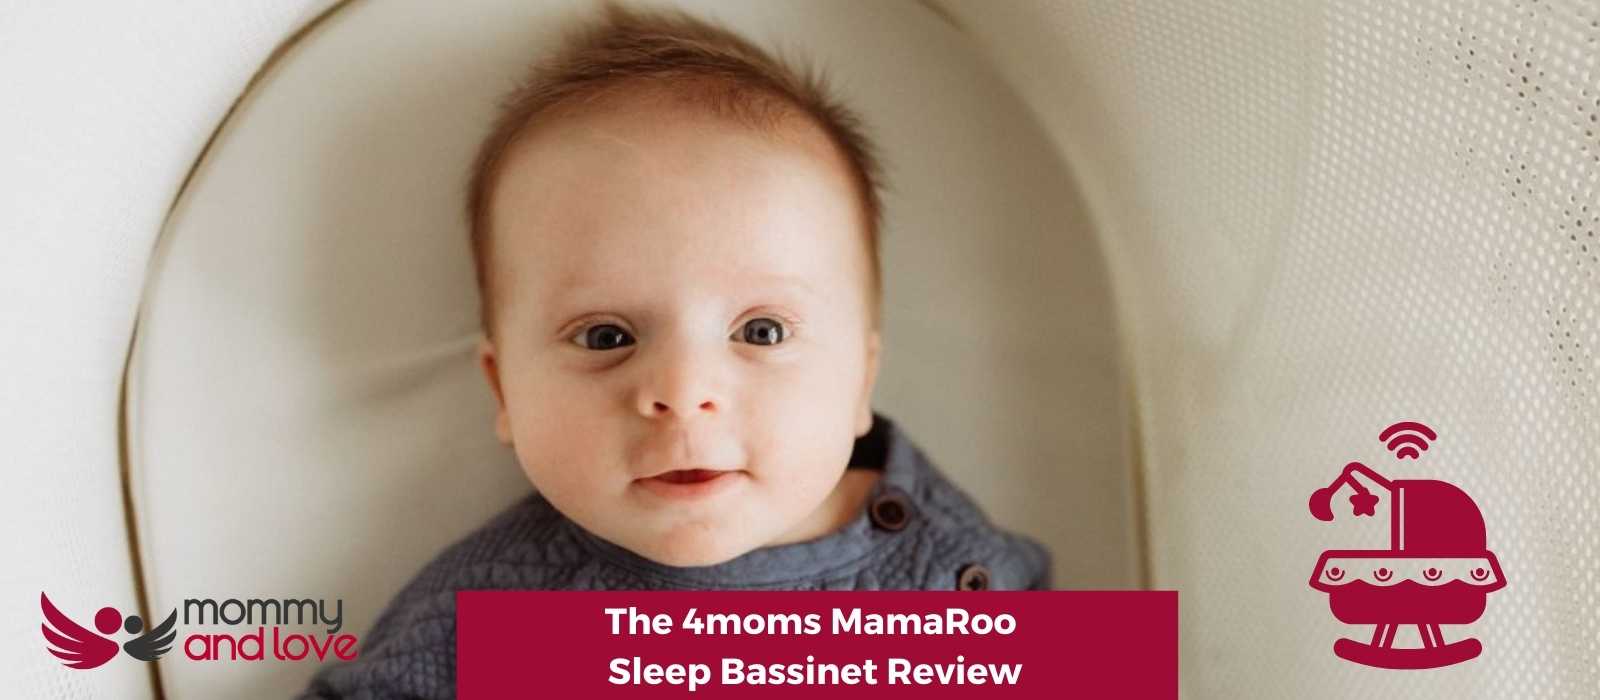 The 4moms MamaRoo Sleep Bassinet Review